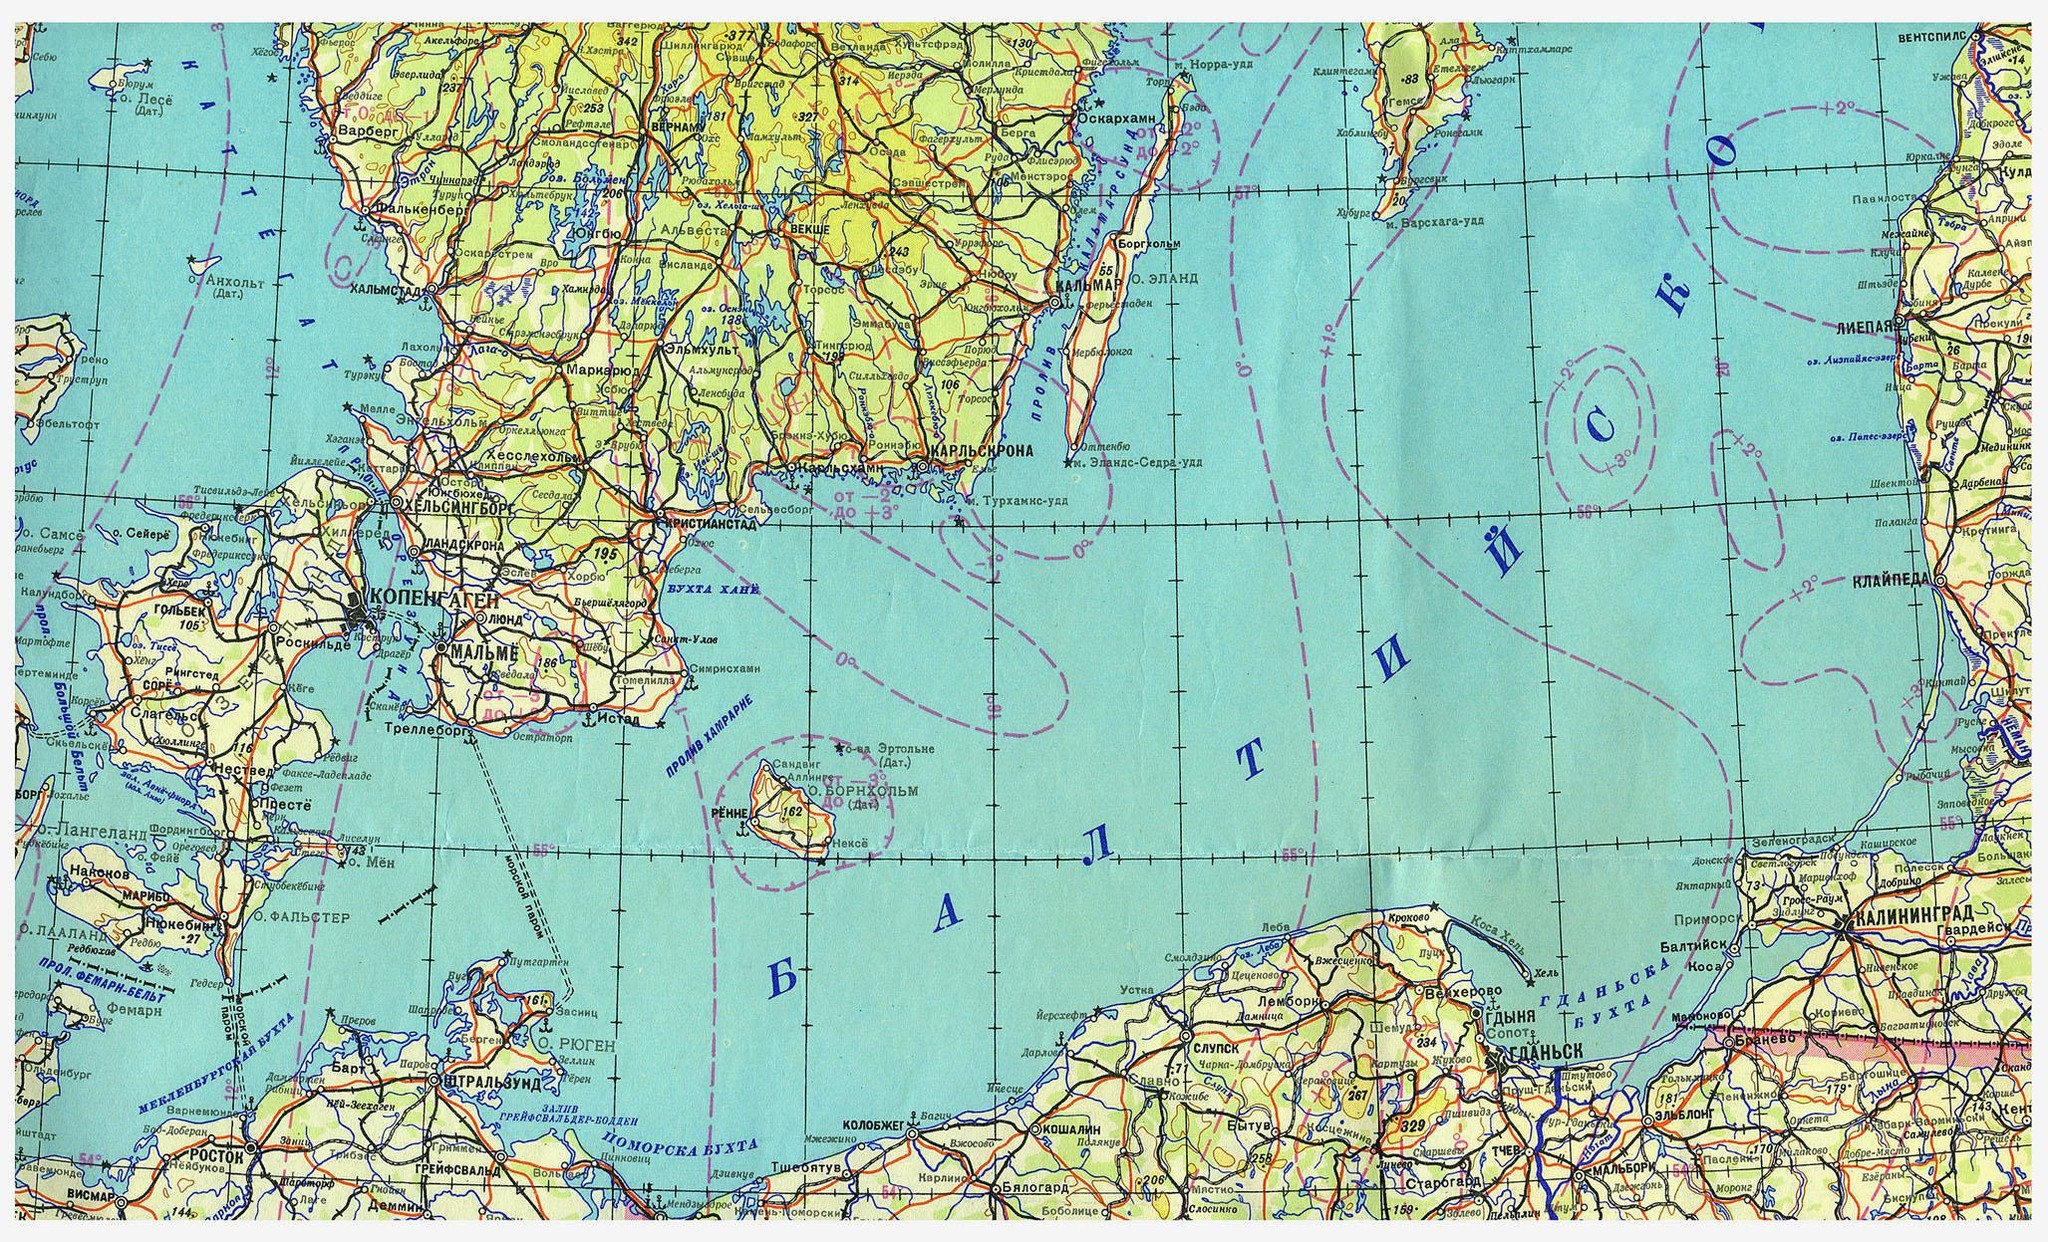 Балтийский на карте. Карта Балтийского моря подробная. Карта финского залива и Балтийского моря. Проливы Балтийского моря на карте. Акватория Балтийского моря на карте.